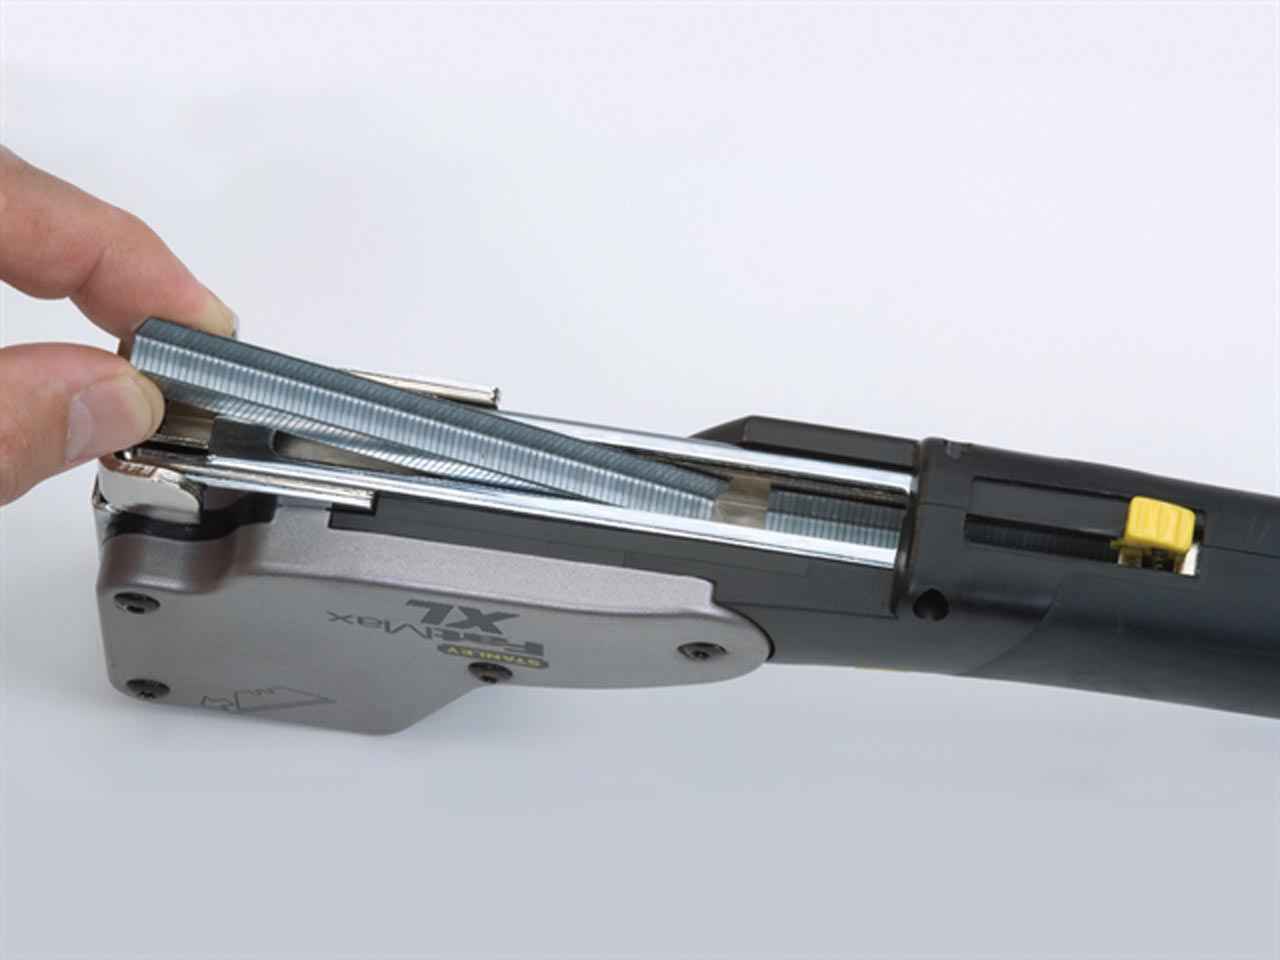 Mechanical tacker Stanley FatMax - staple 0-PHT350 guns, - Nailers, tools 0-PHT350 - guns riveting staple Manual